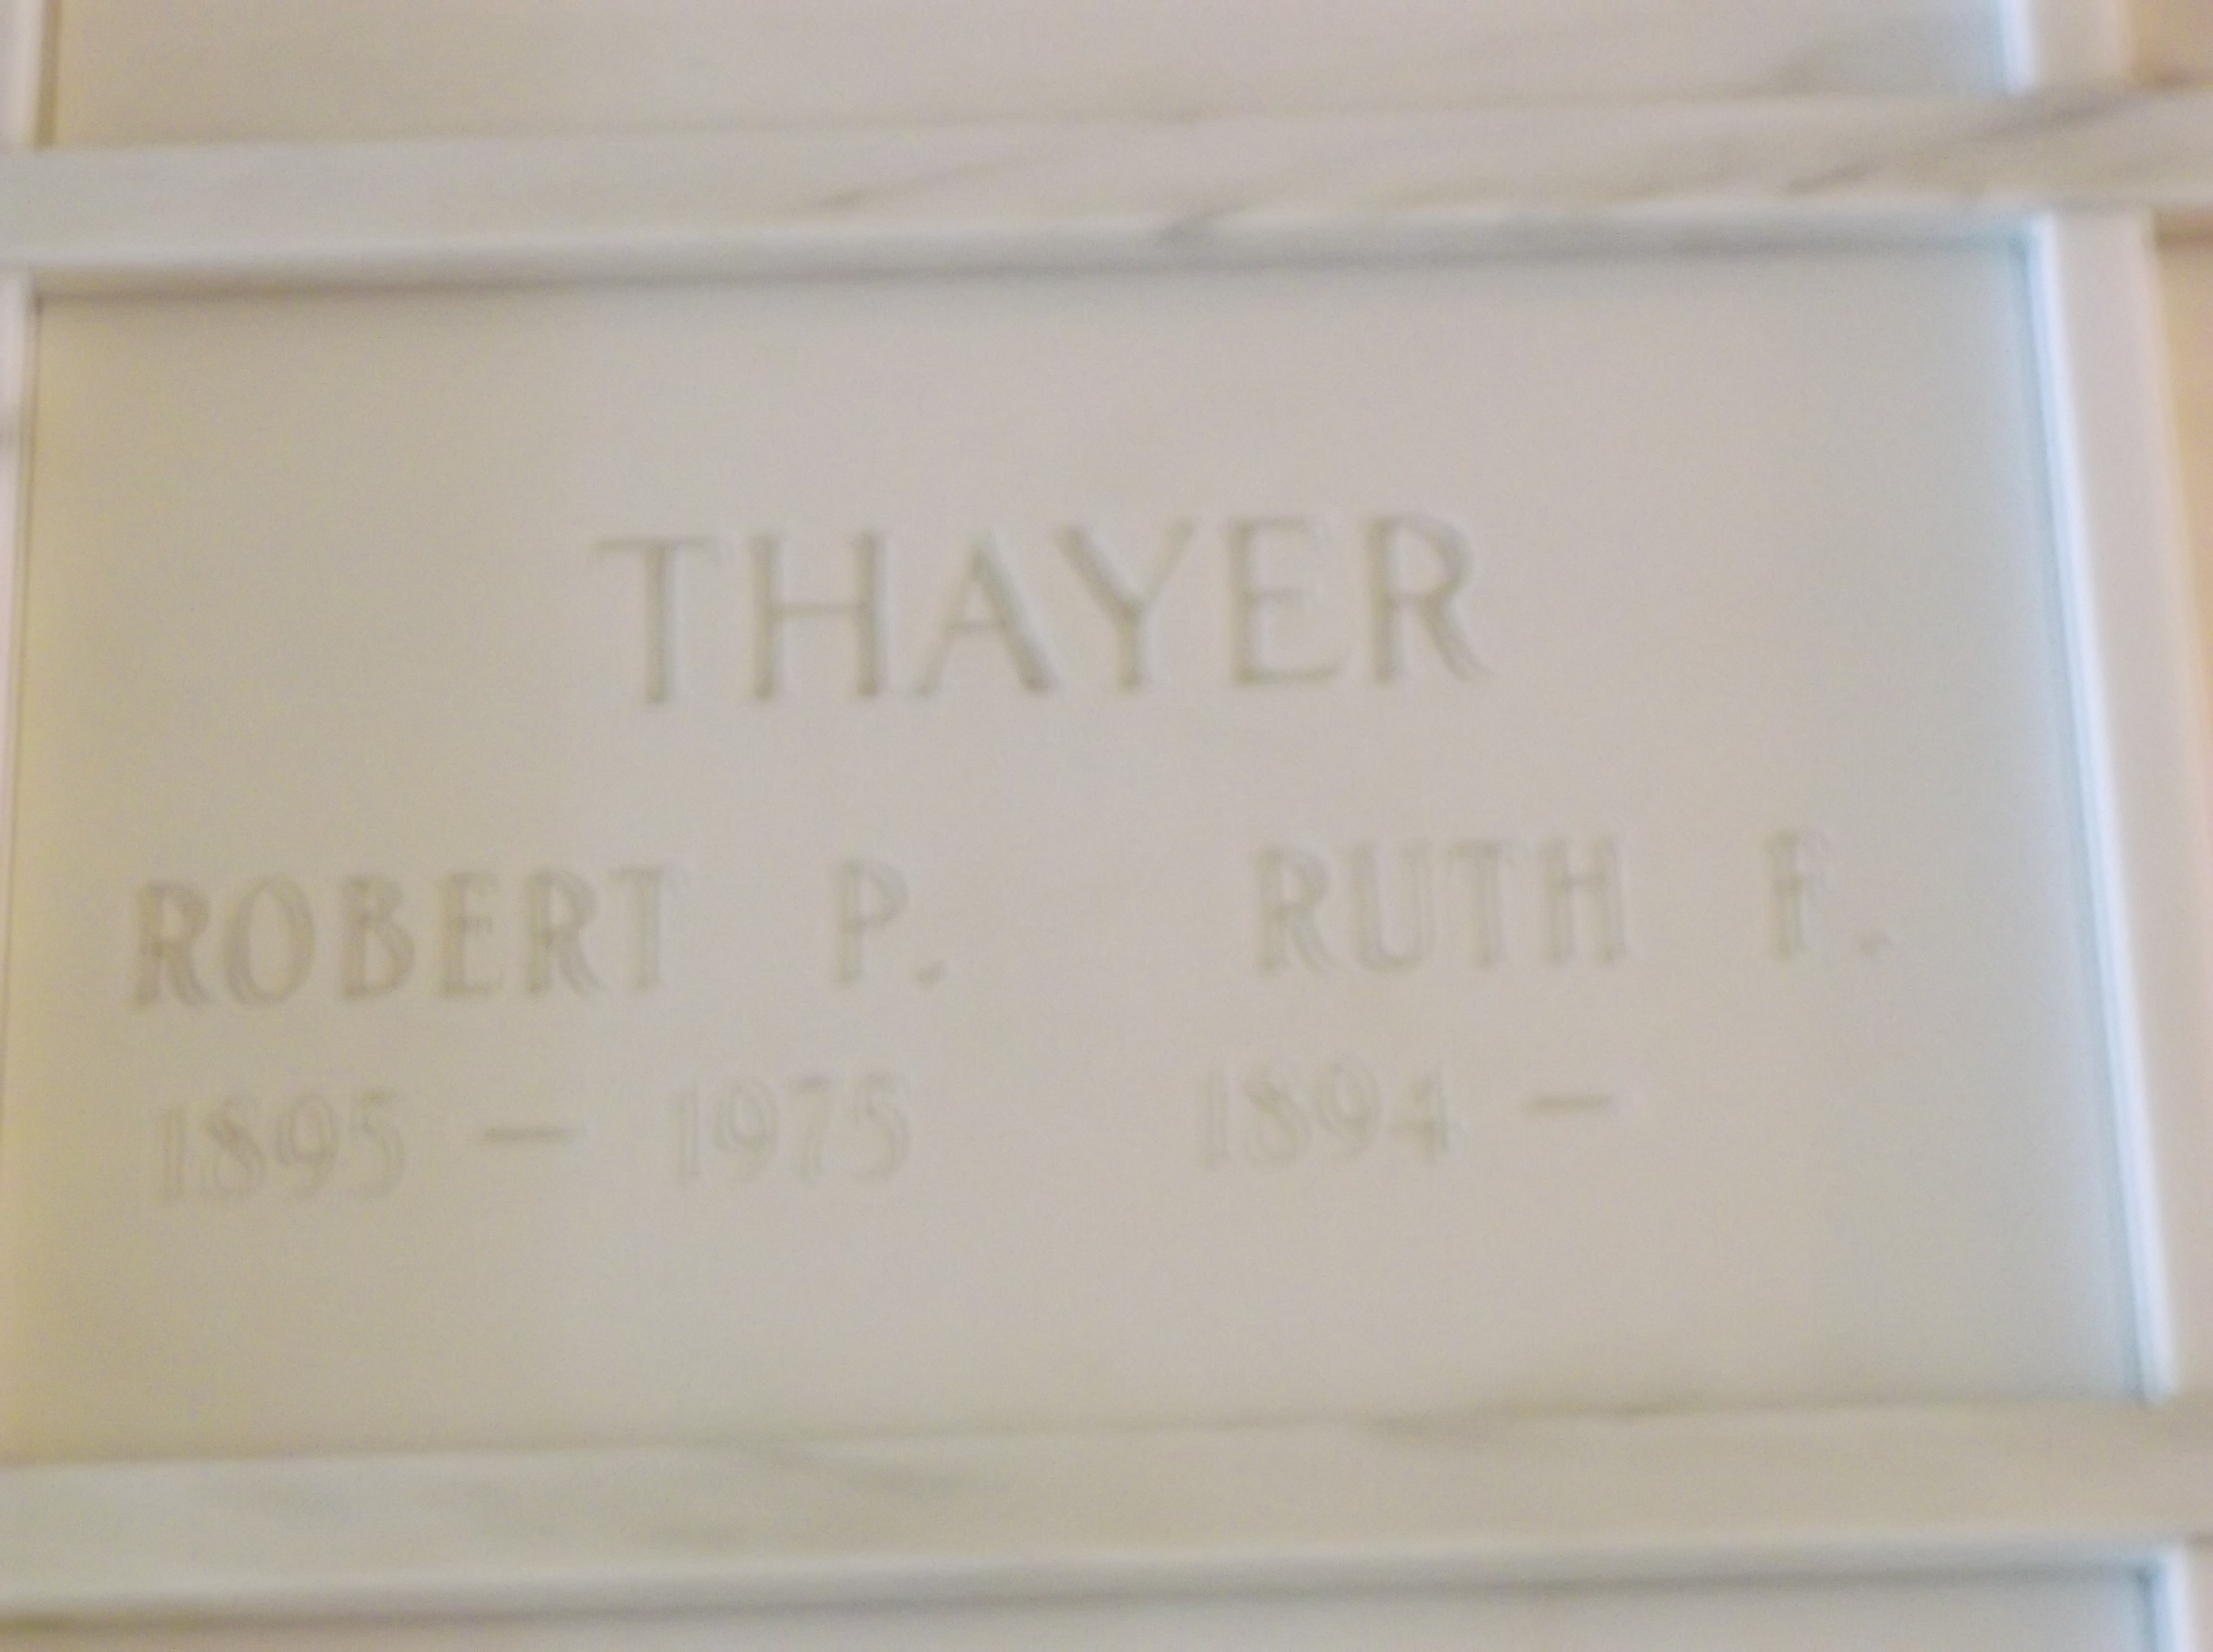 Robert P Thayer